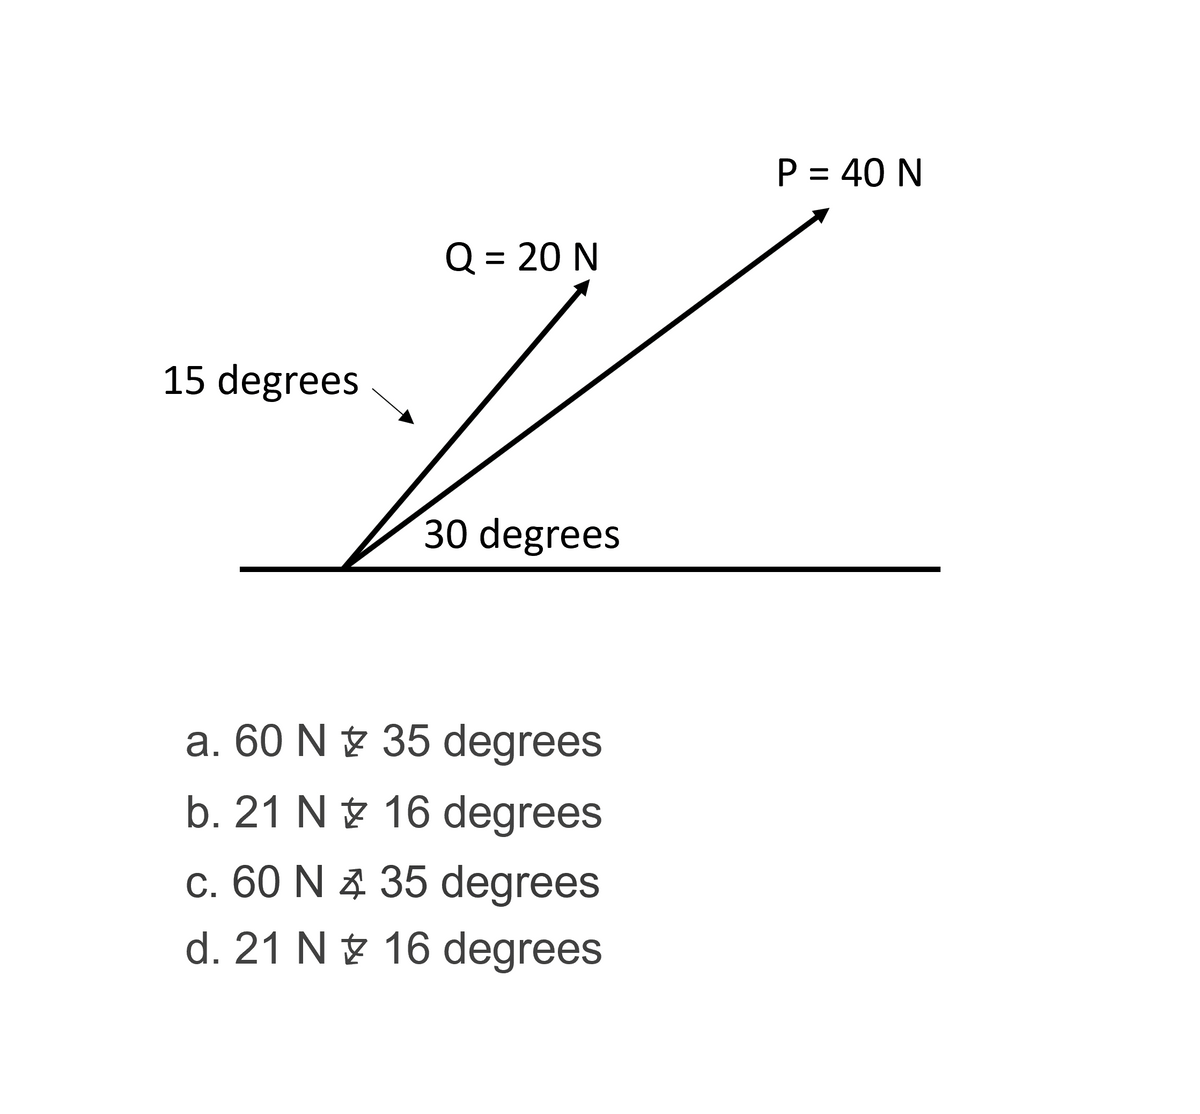 Q = 20 N
-2
30 degrees
15 degrees
35 degrees
a. 60 N
b. 21 N
16 degrees
c. 60 N * 35 degrees
d. 21 N 16 degrees
P = 40 N